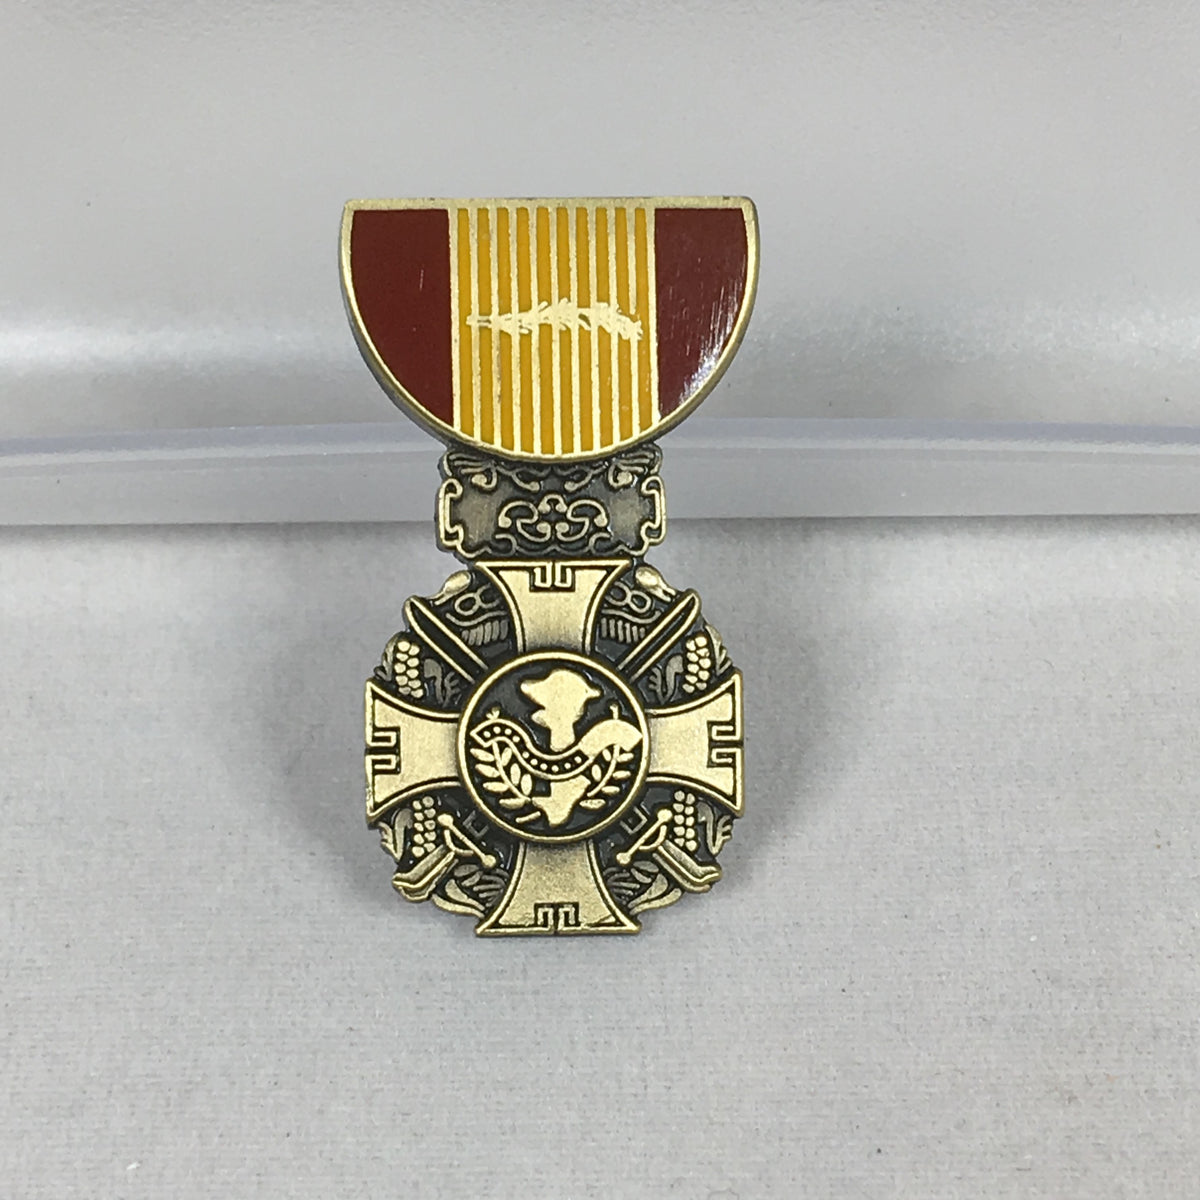 Republic of Vietnam Gallantry Corps Pin